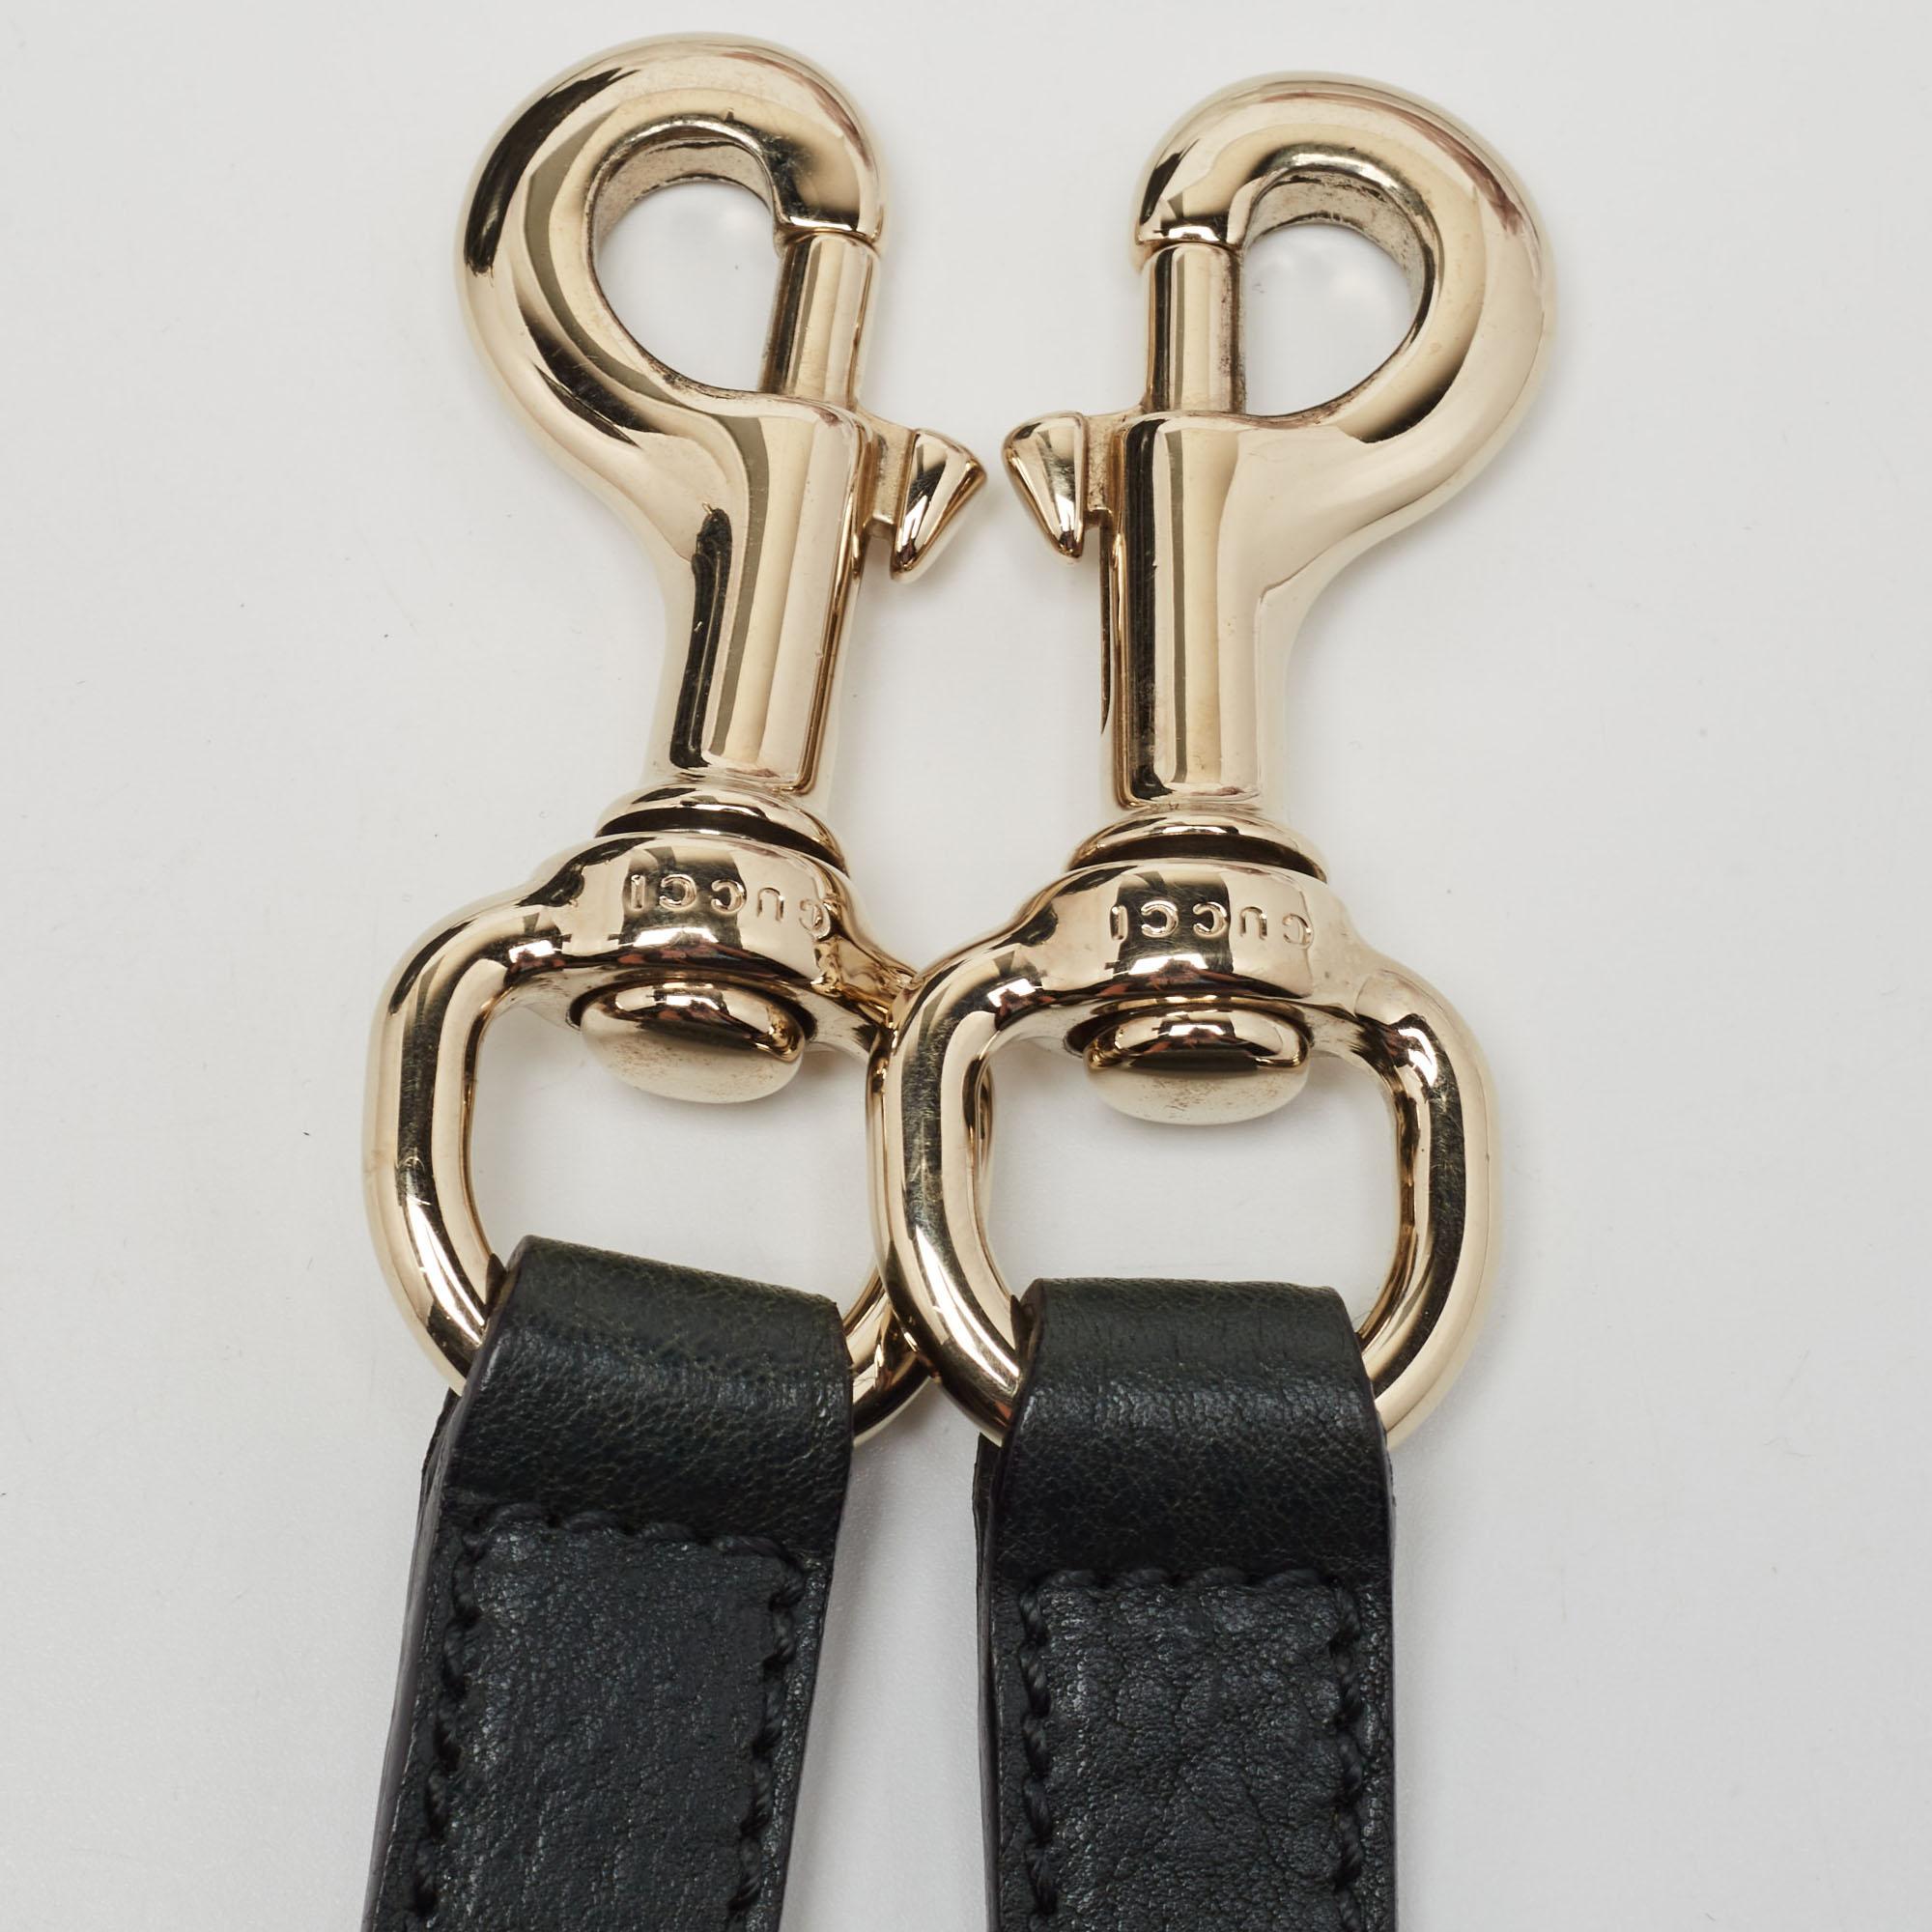 Gucci Green/Black Python And Leather Interlocking G Charm Bag